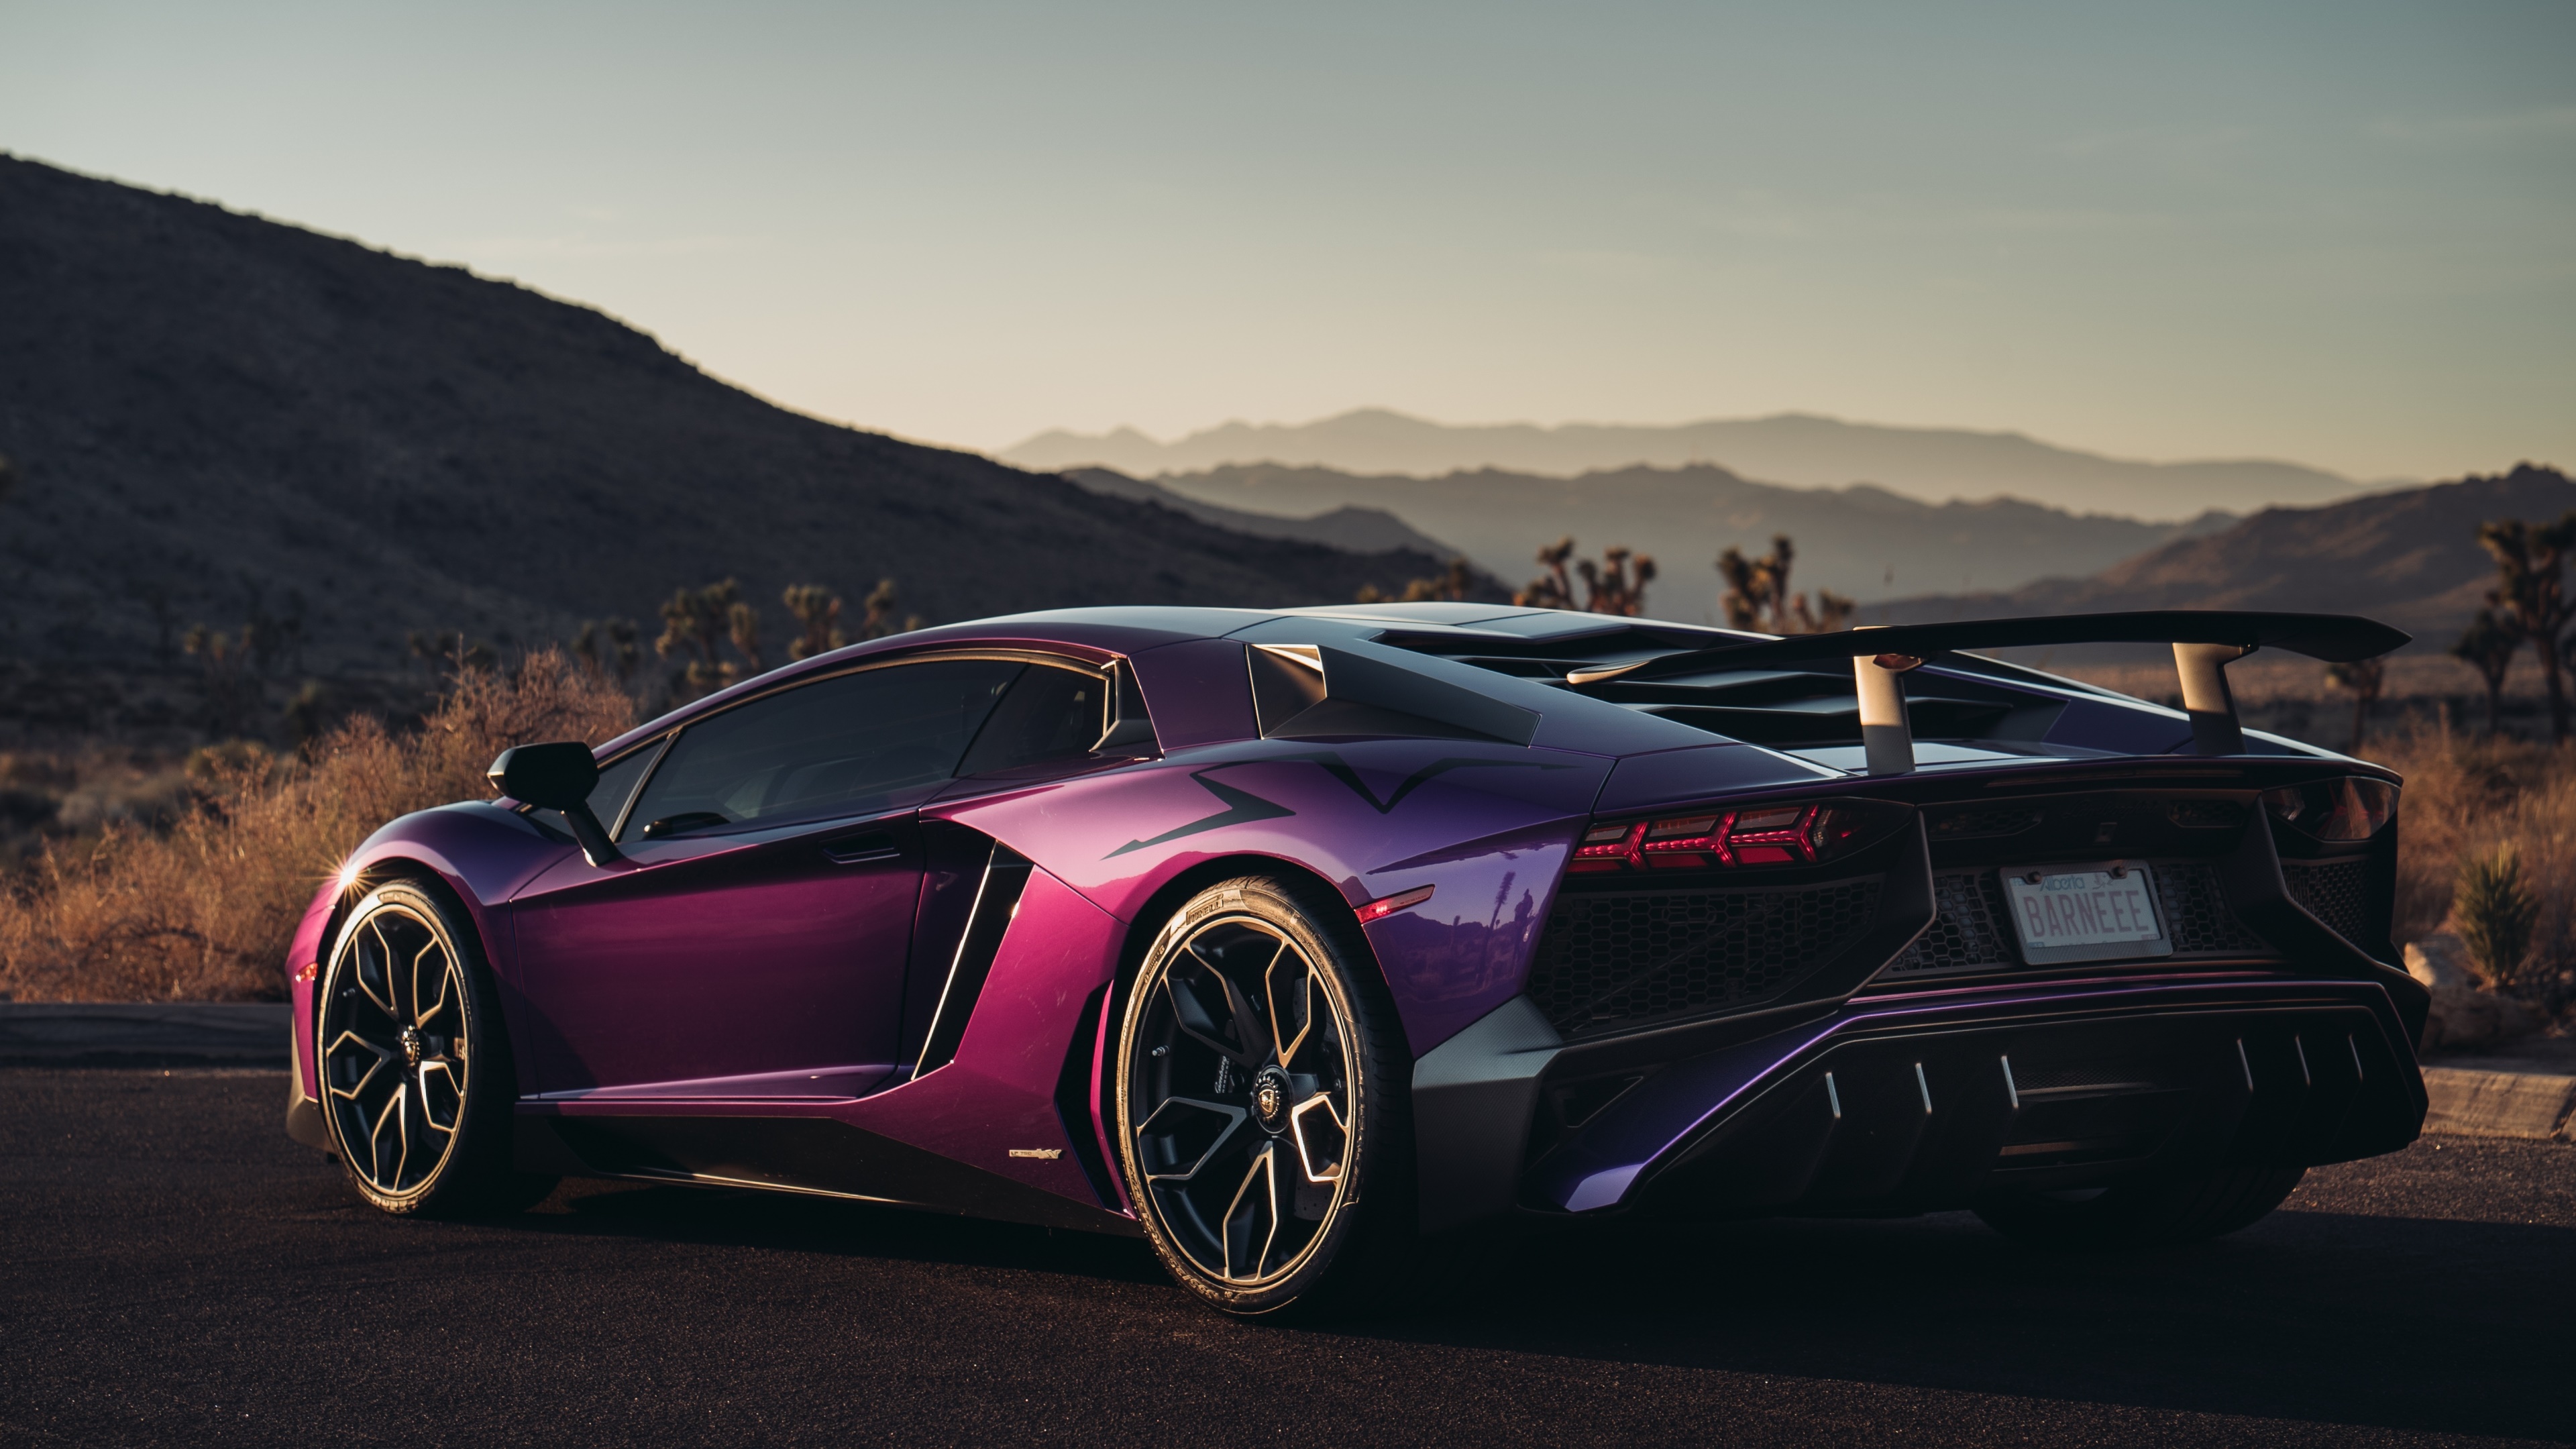 Shiny purple and pink Lamborghini Aventador LP 750-4 SuperVeloce